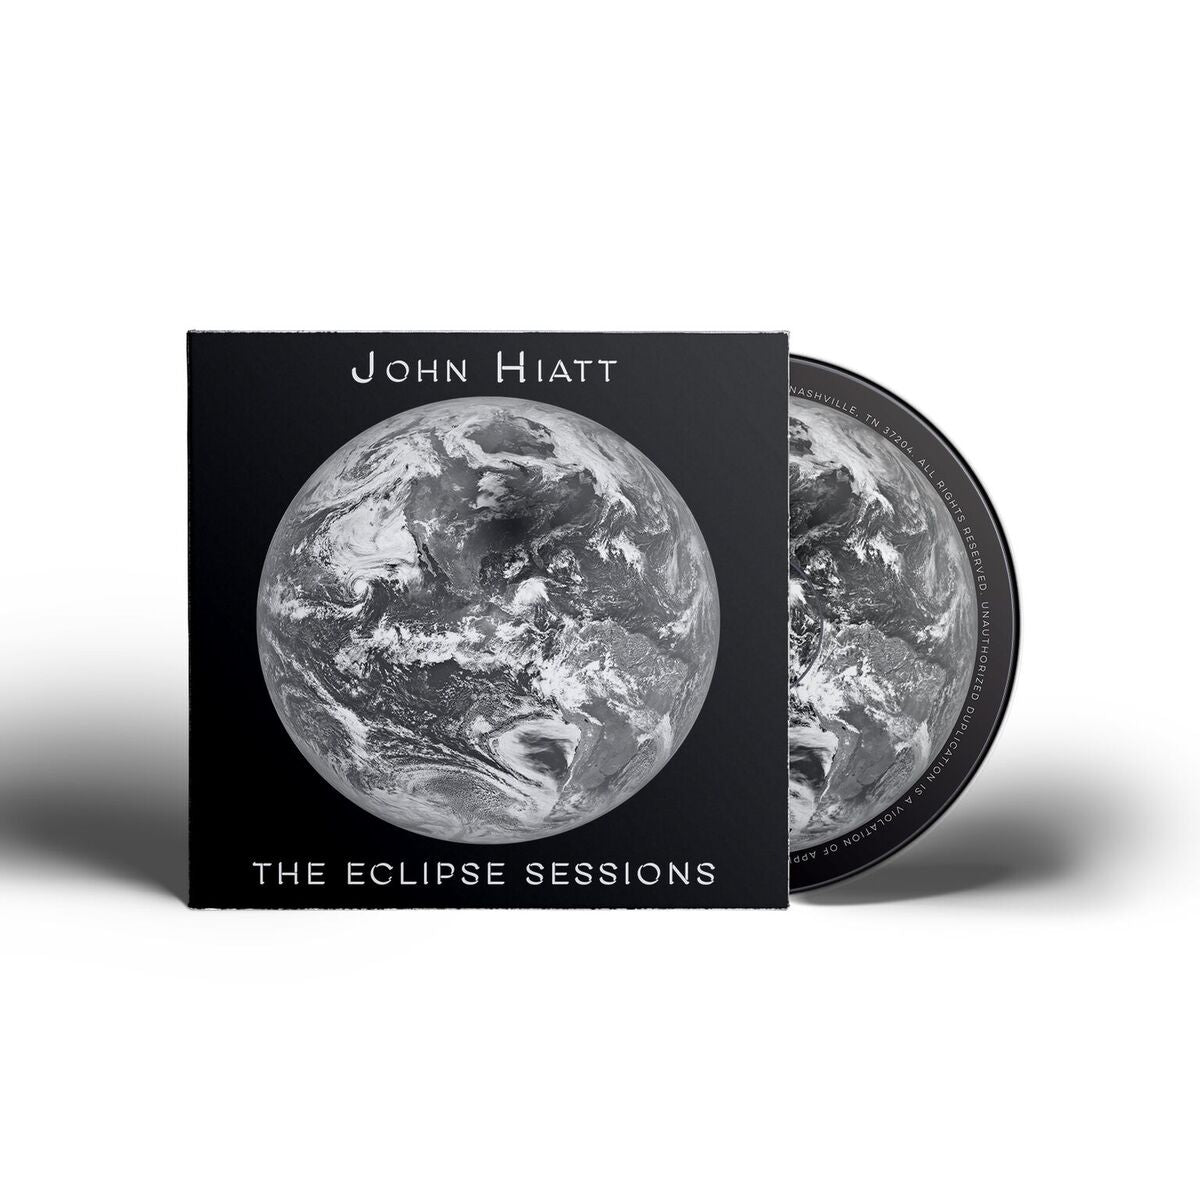 John Hiatt - The Eclipse Sessions [CD]